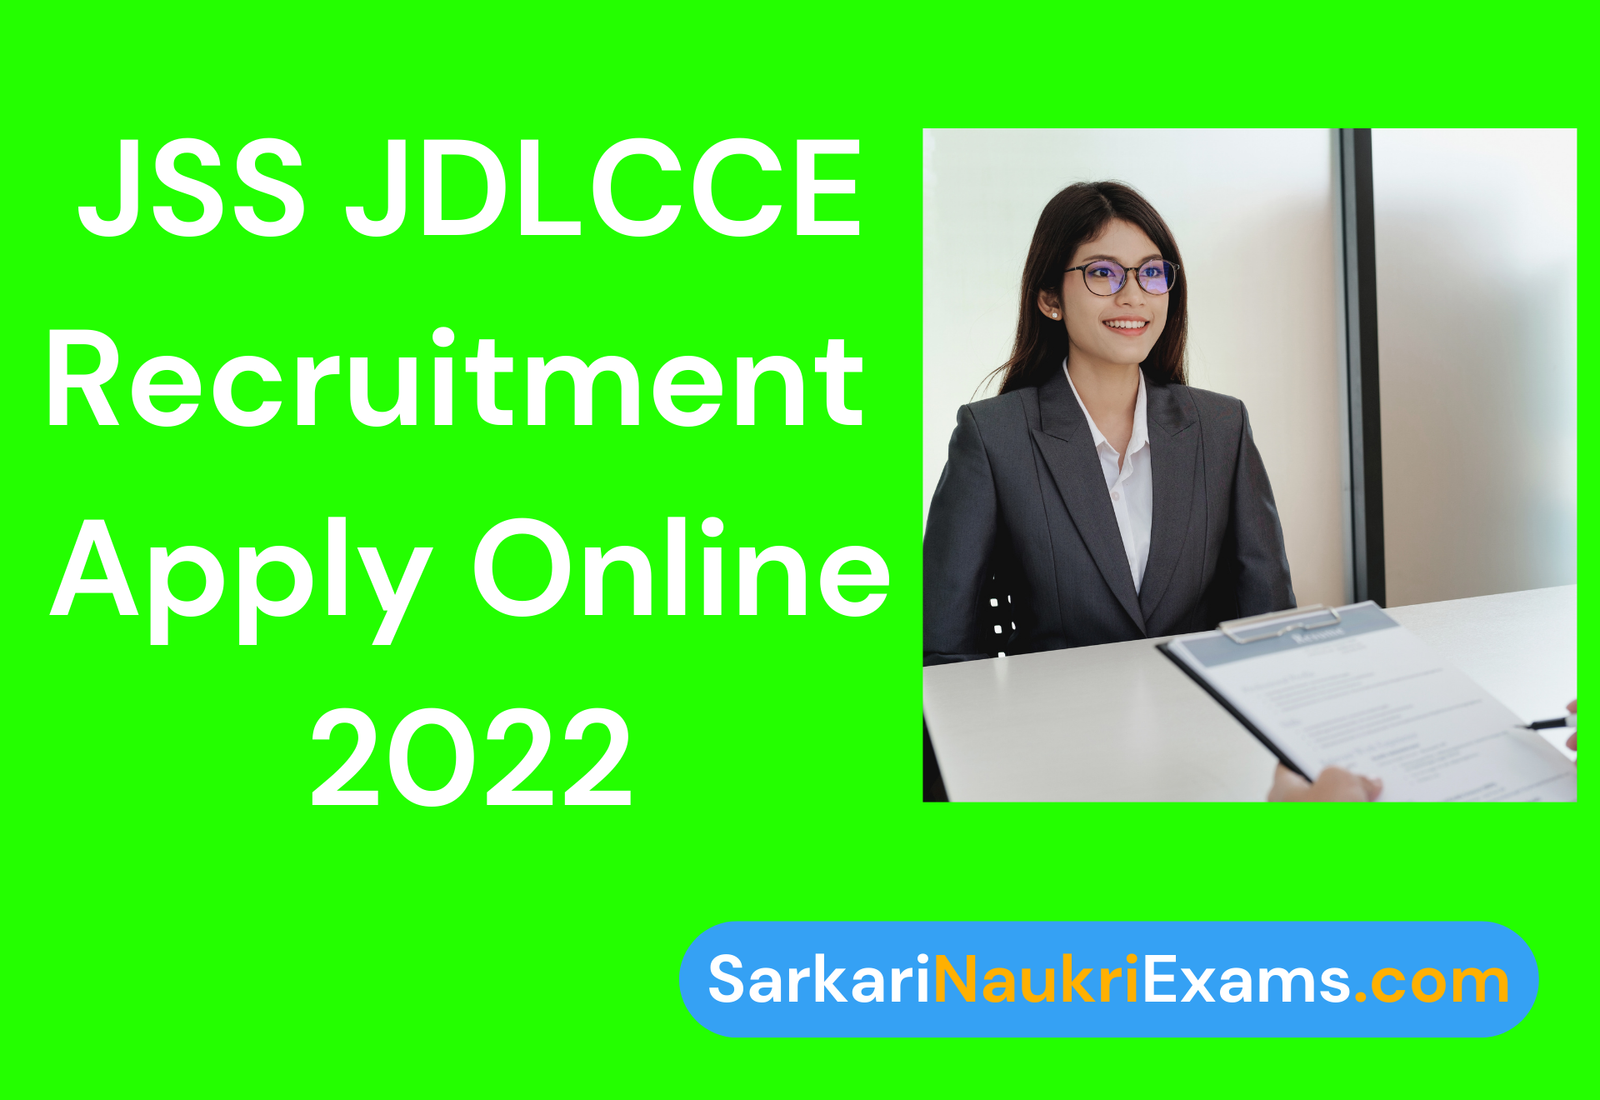 JSS Recruitment Notification 2022 | 176 JDLCCE Vacancy Online Form